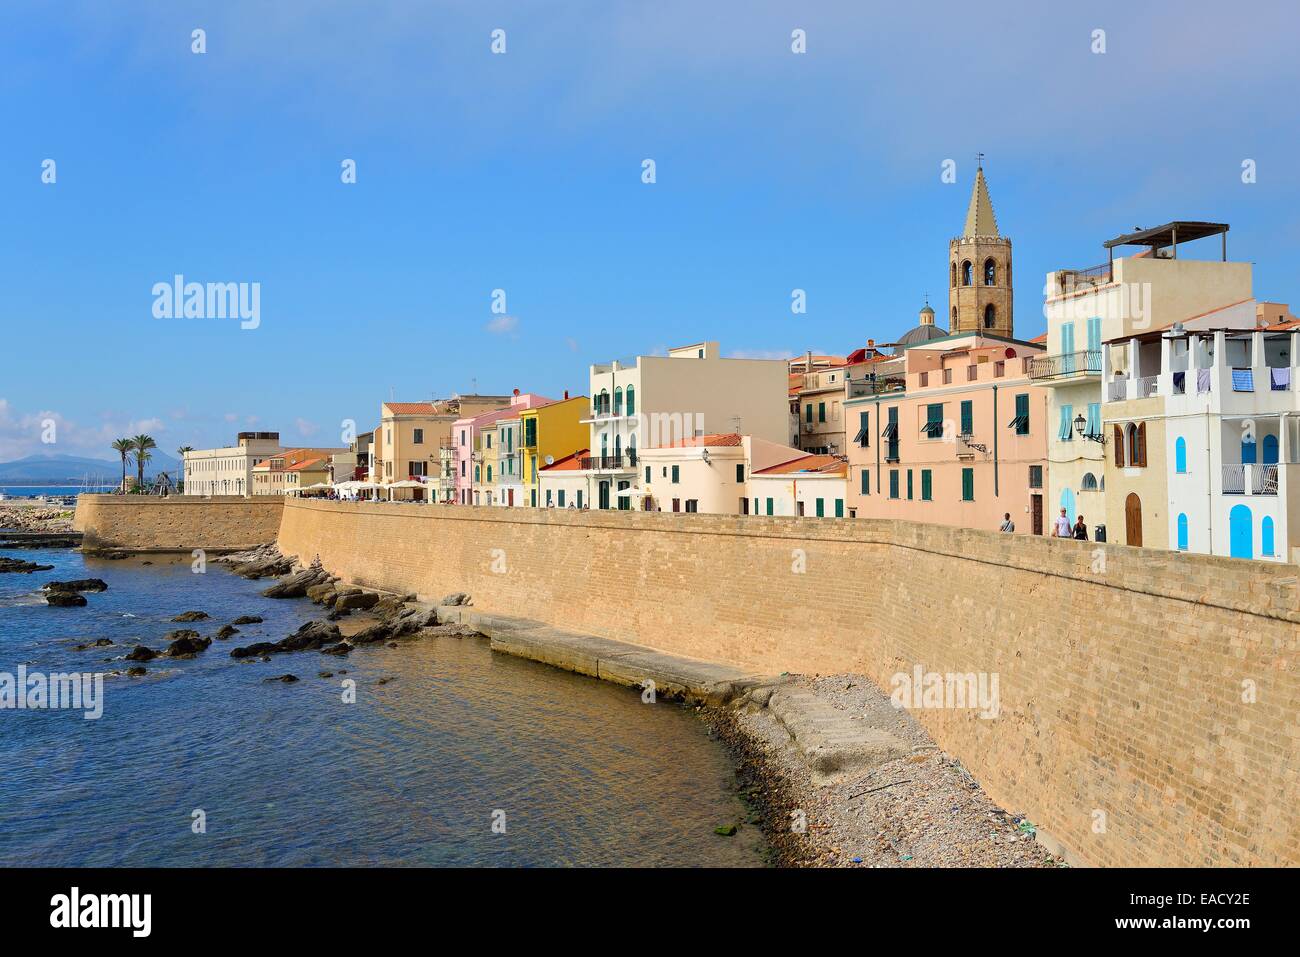 Row of houses on the old ramparts by the sea, Alghero, Province of Sassari, Sardinia, Italy Stock Photo